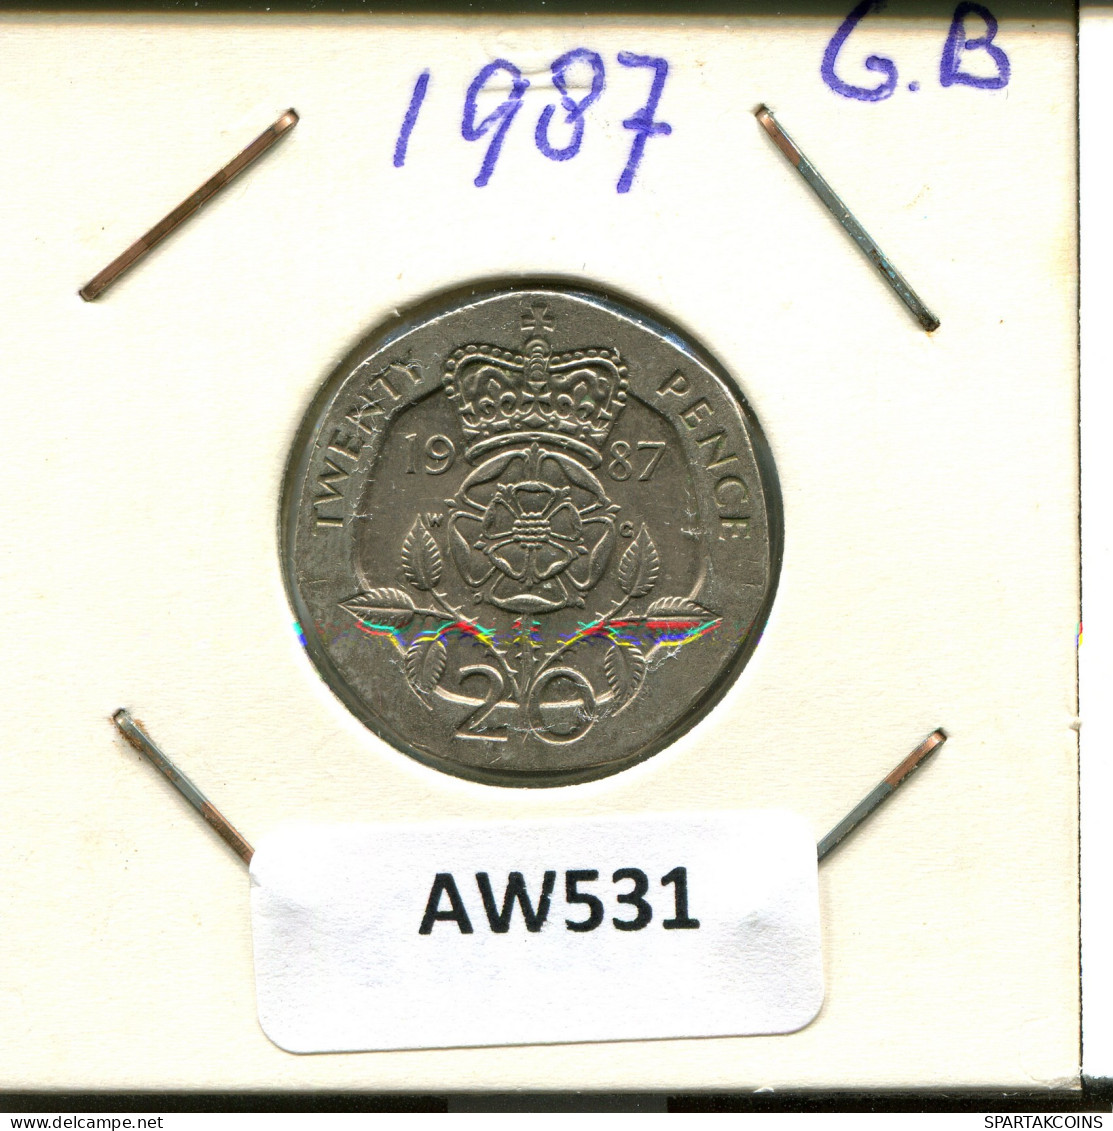 20 PENCE 1987 UK GROßBRITANNIEN GREAT BRITAIN Münze #AW531.D - 20 Pence